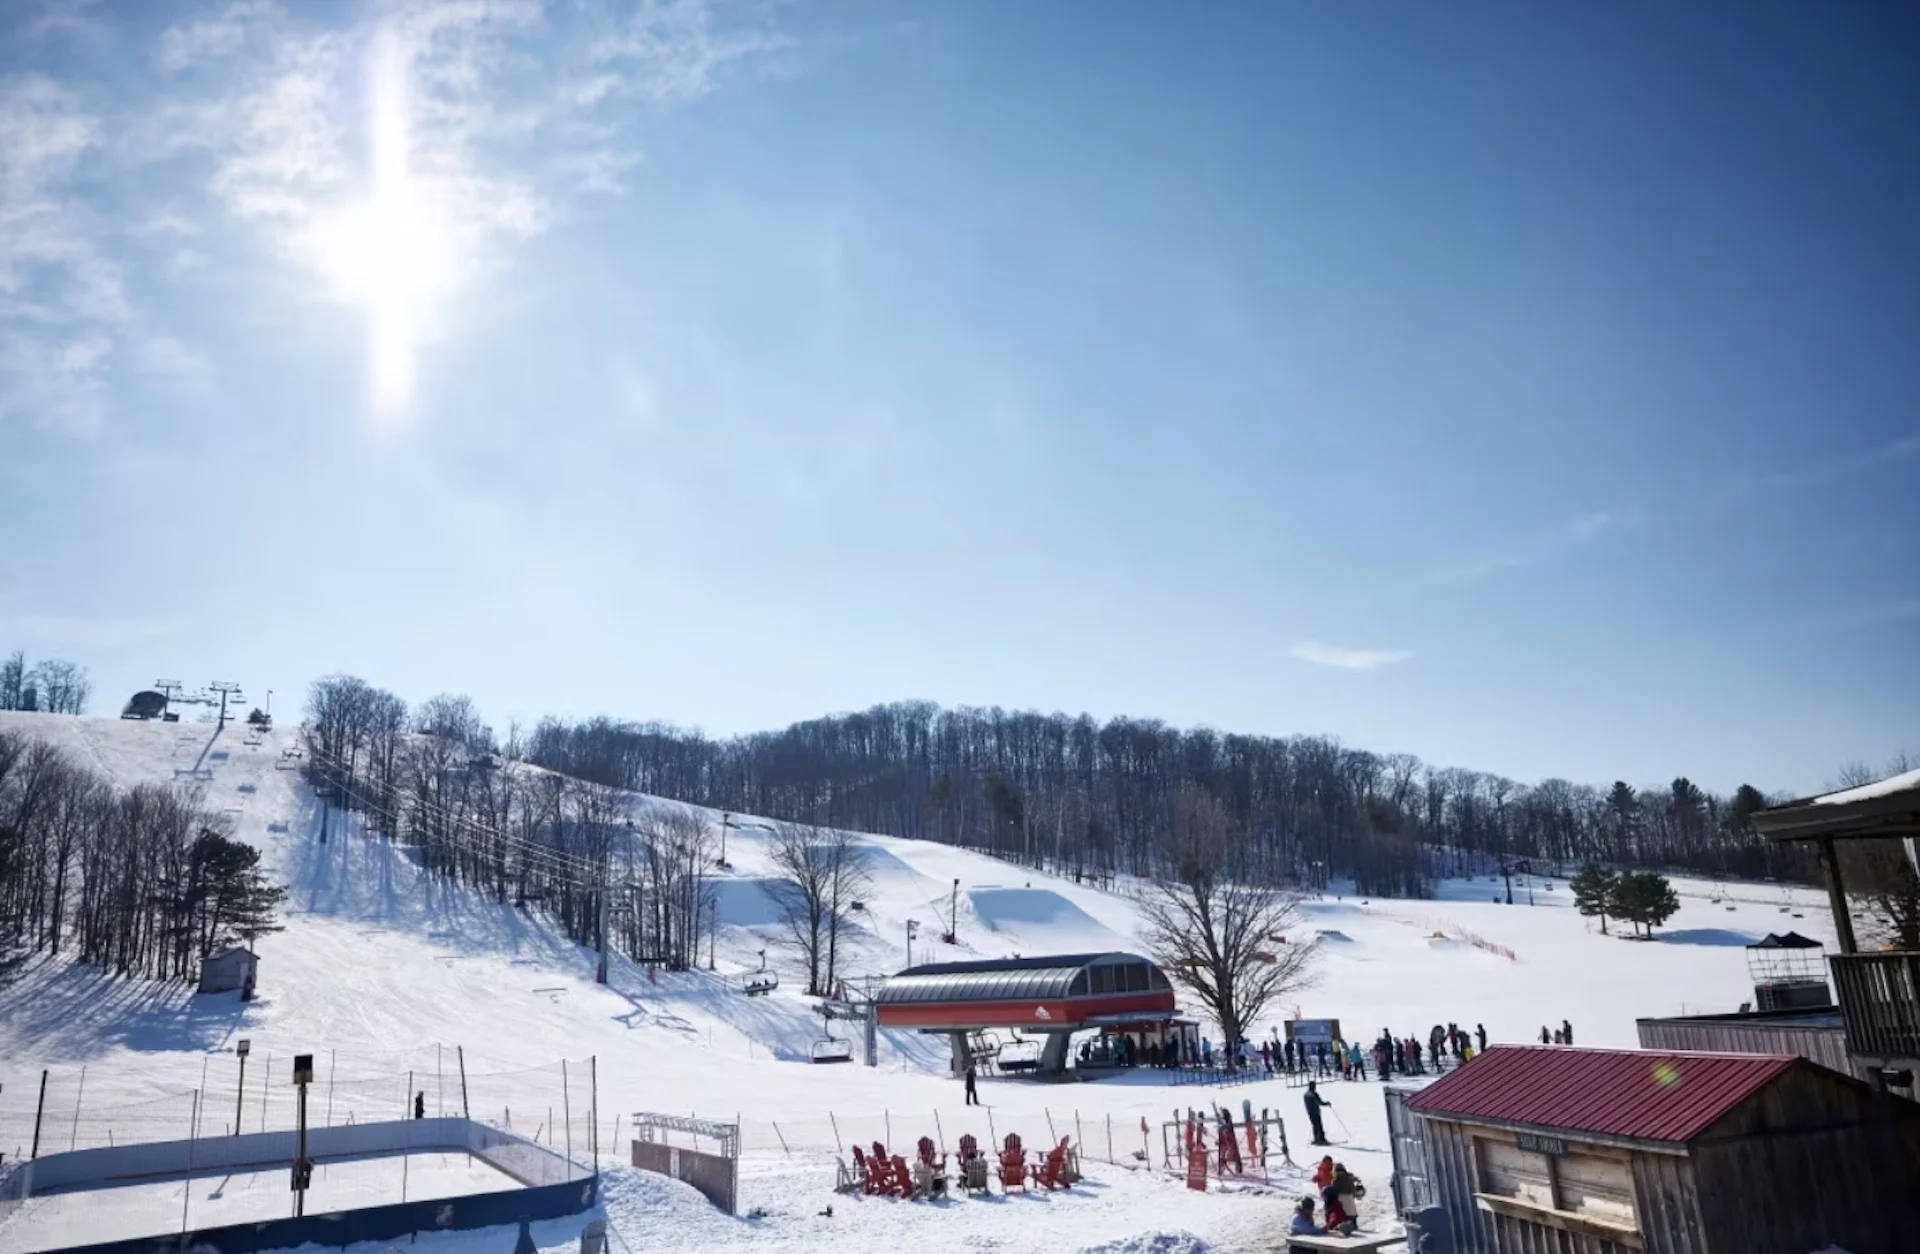 Ontario ski destinations fight Mother Nature and public perception amid warmth